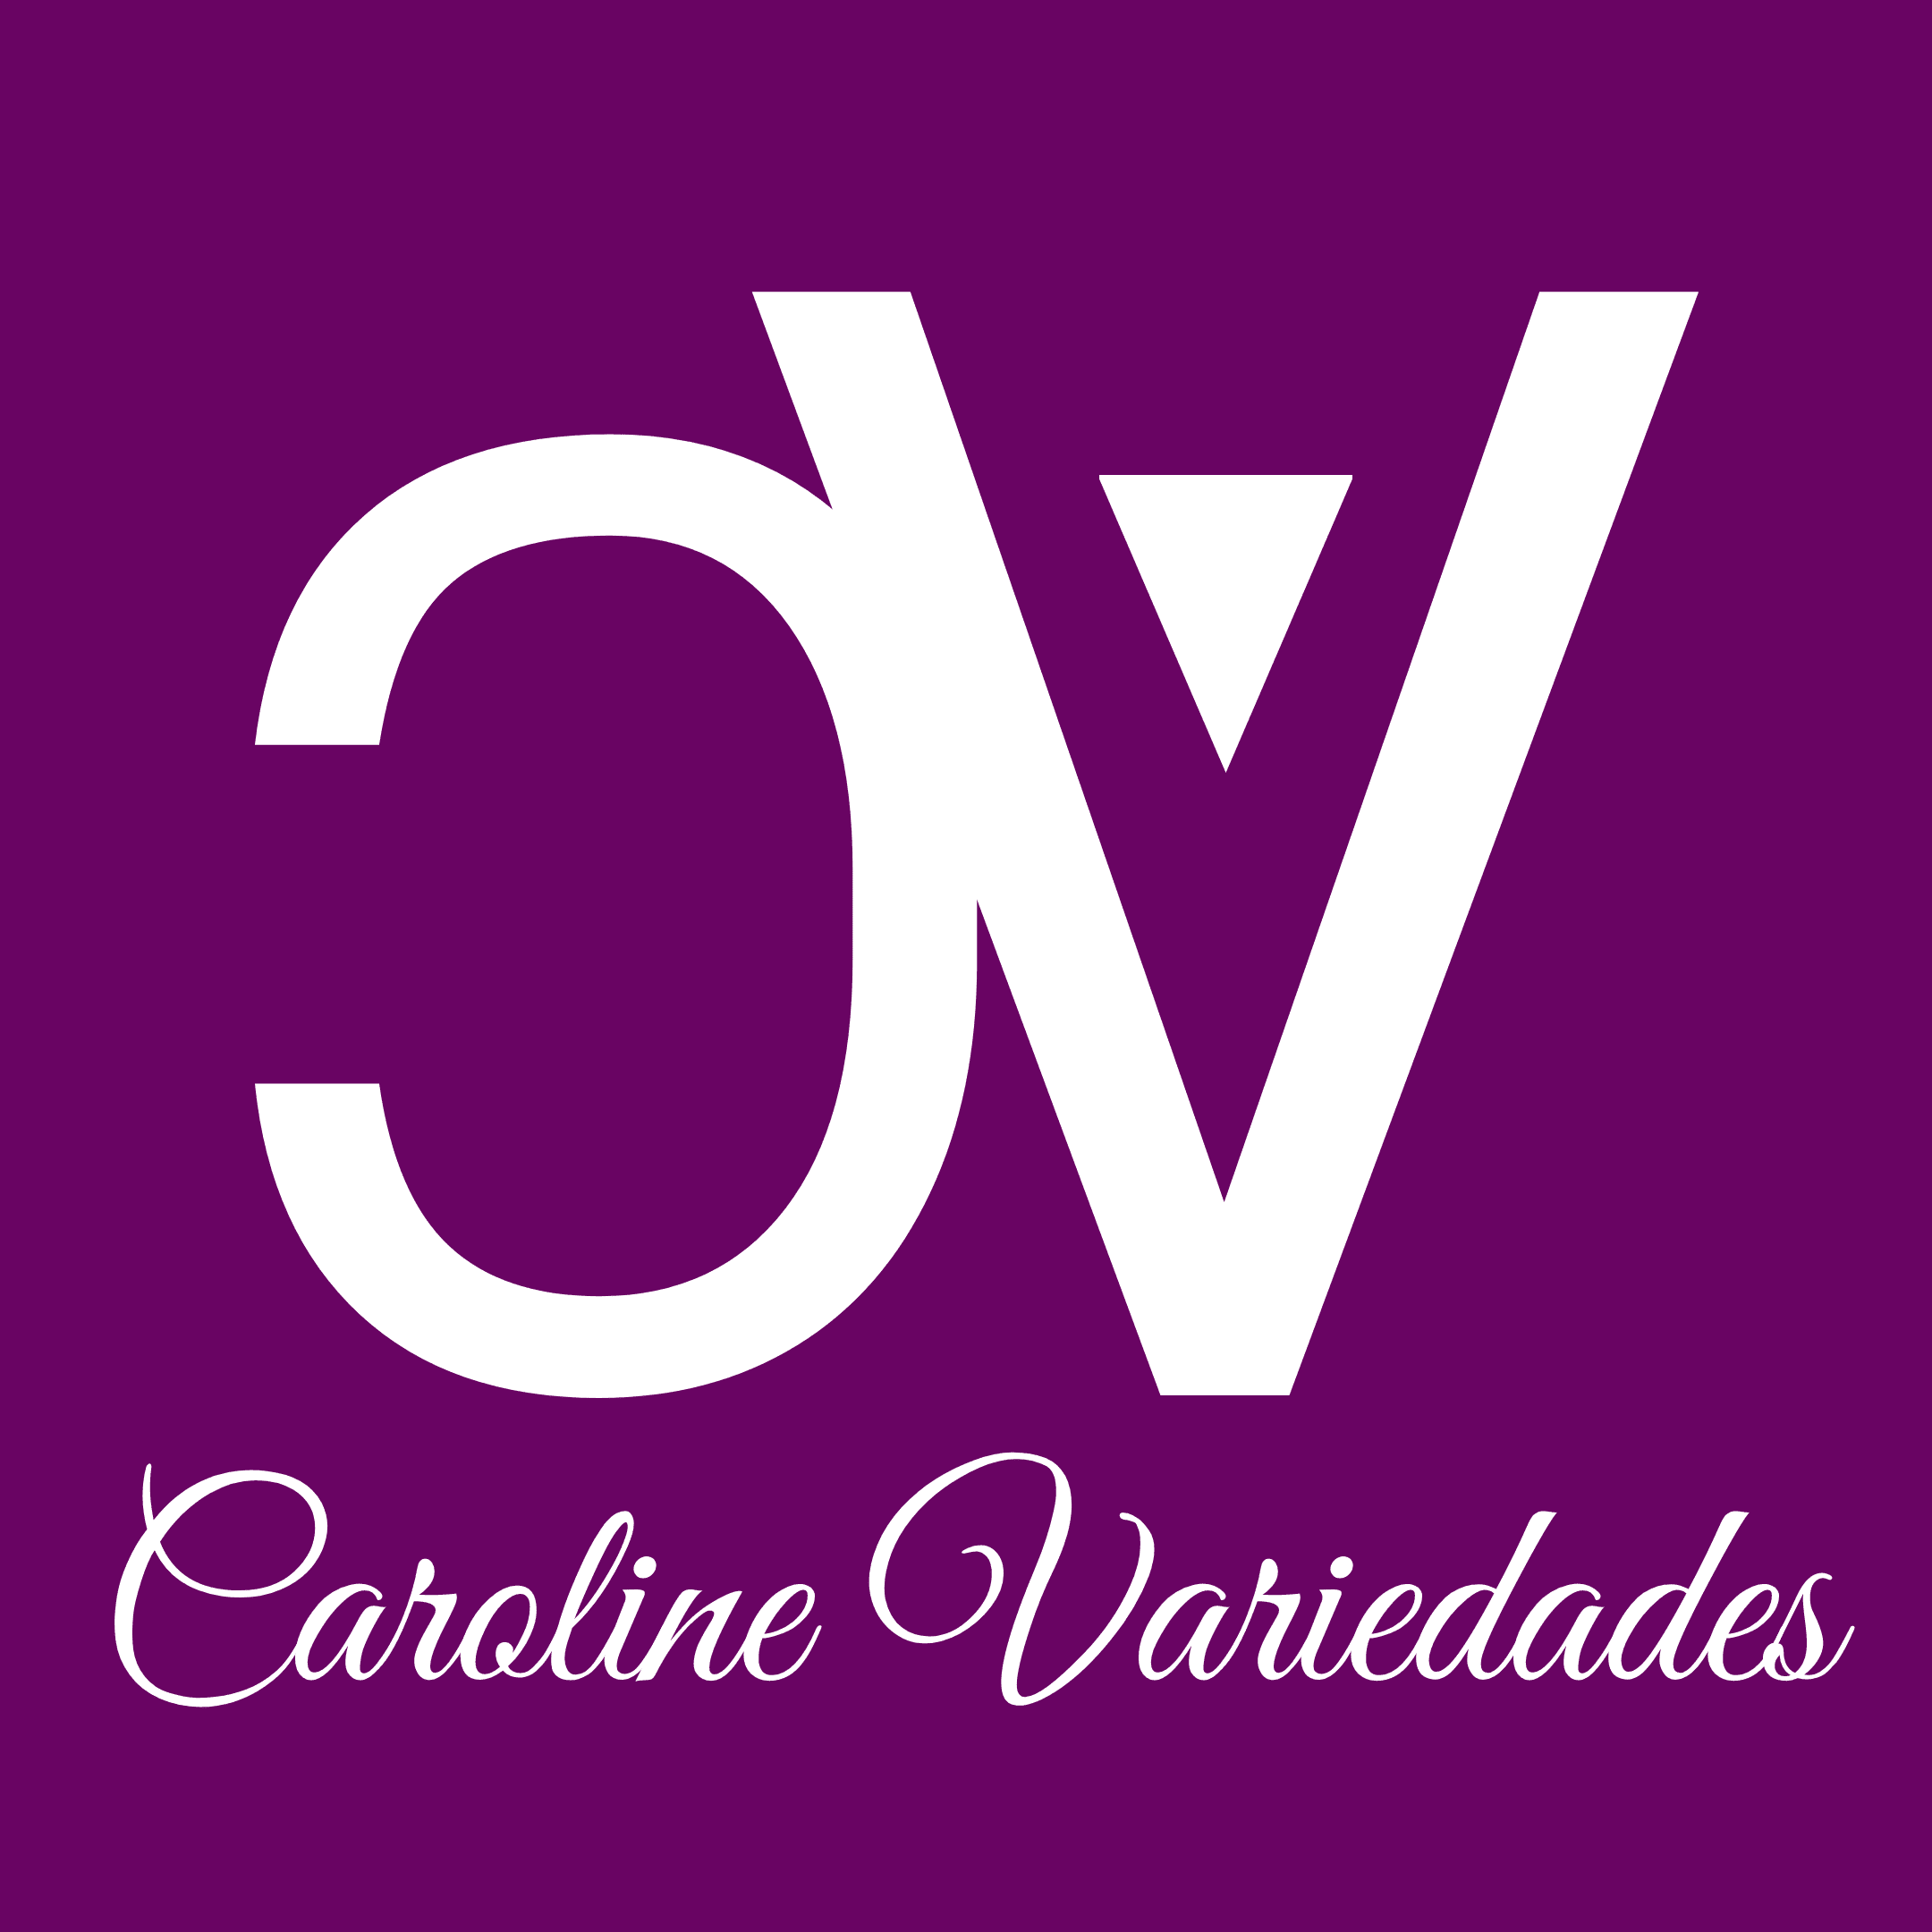 Caroline Variedades